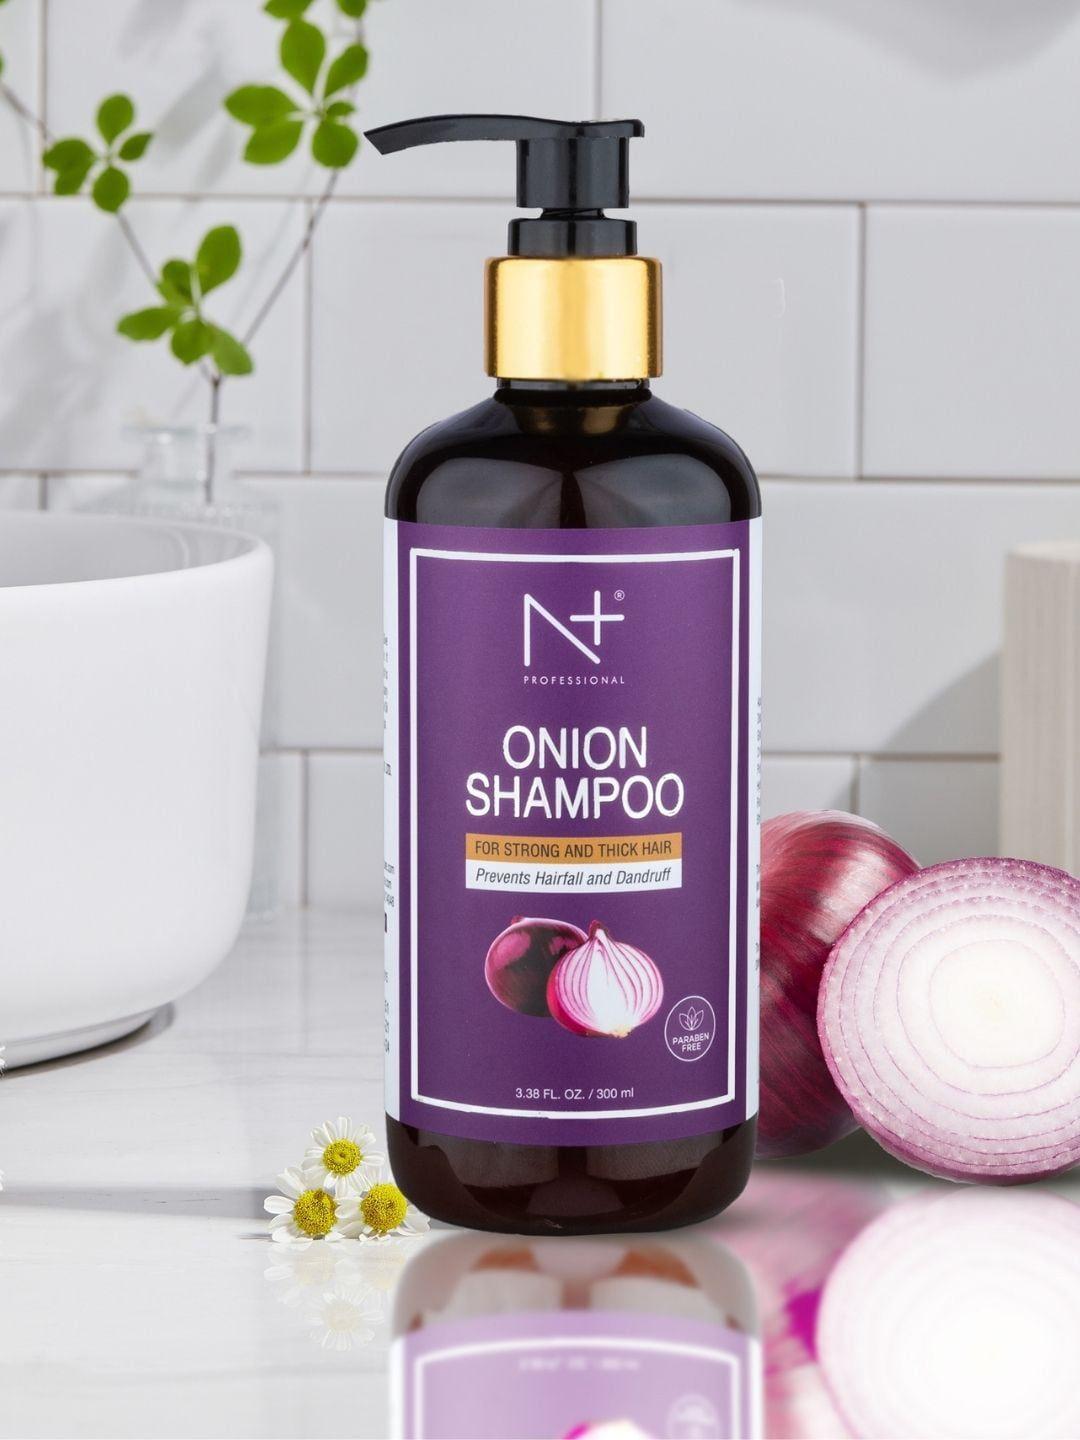 n plus professional onion shampoo with tea tree oil - prevents hairfall & dandruff - 300ml